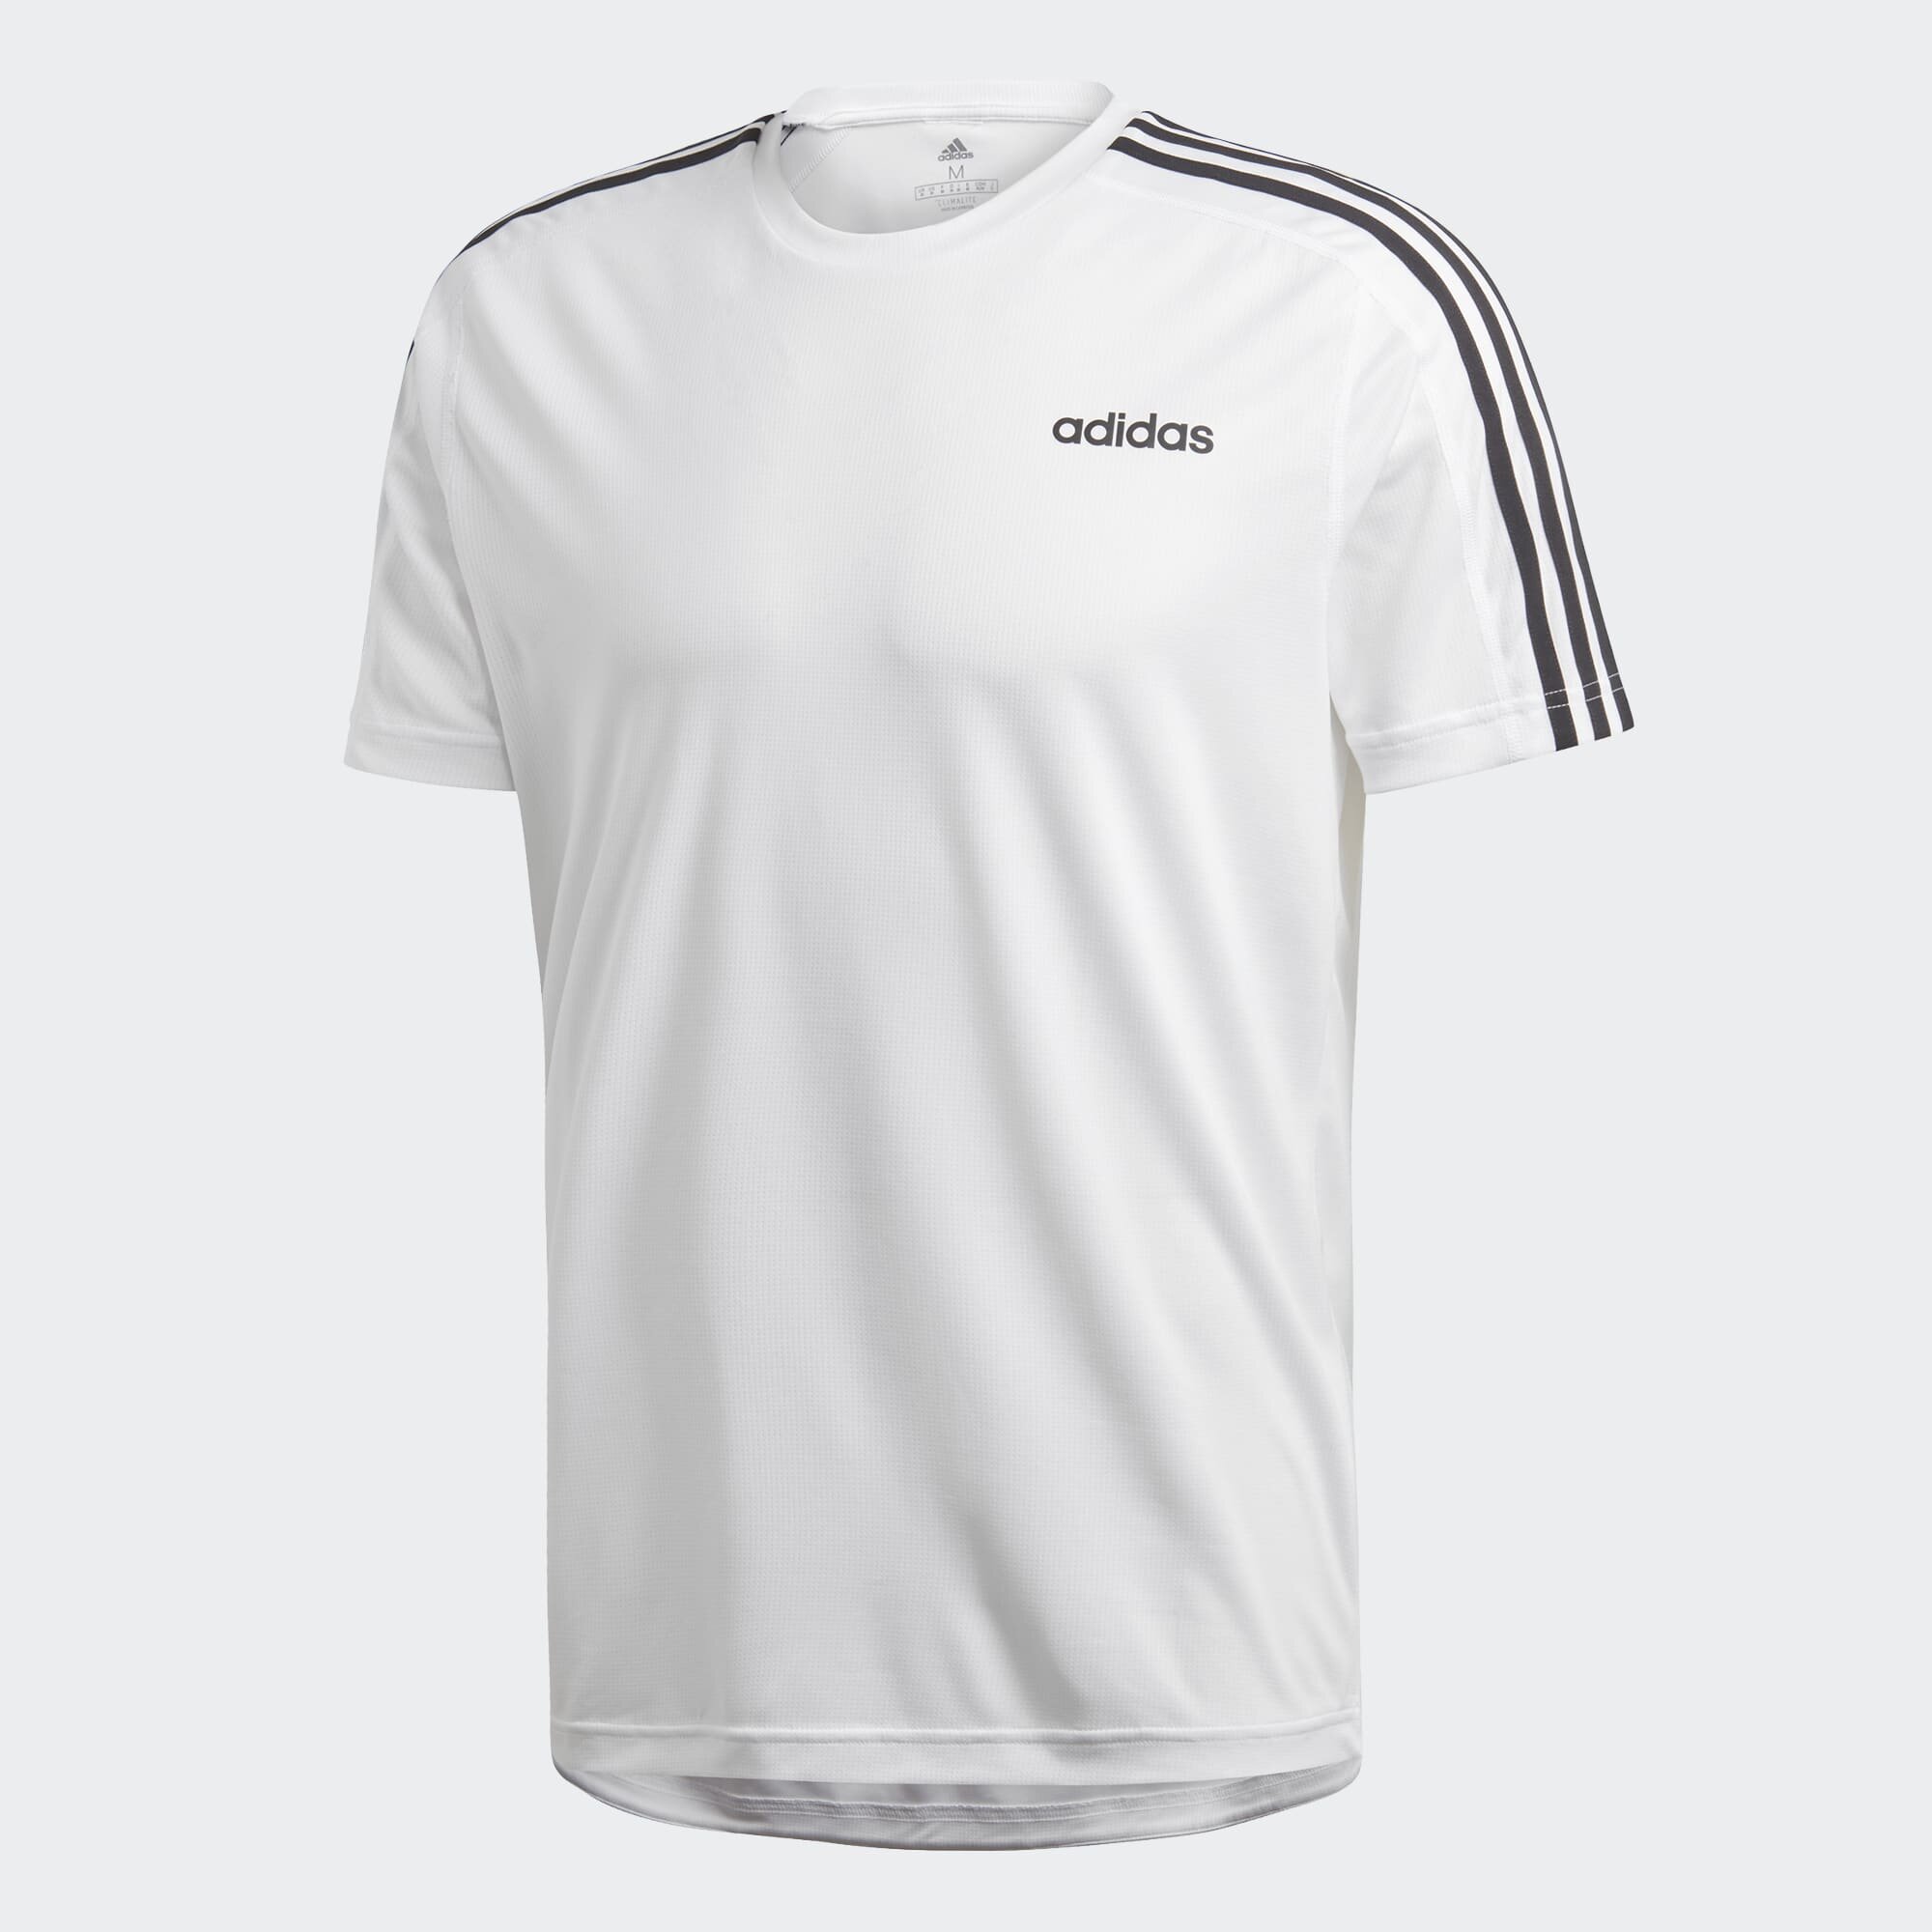 adidas new t shirt design